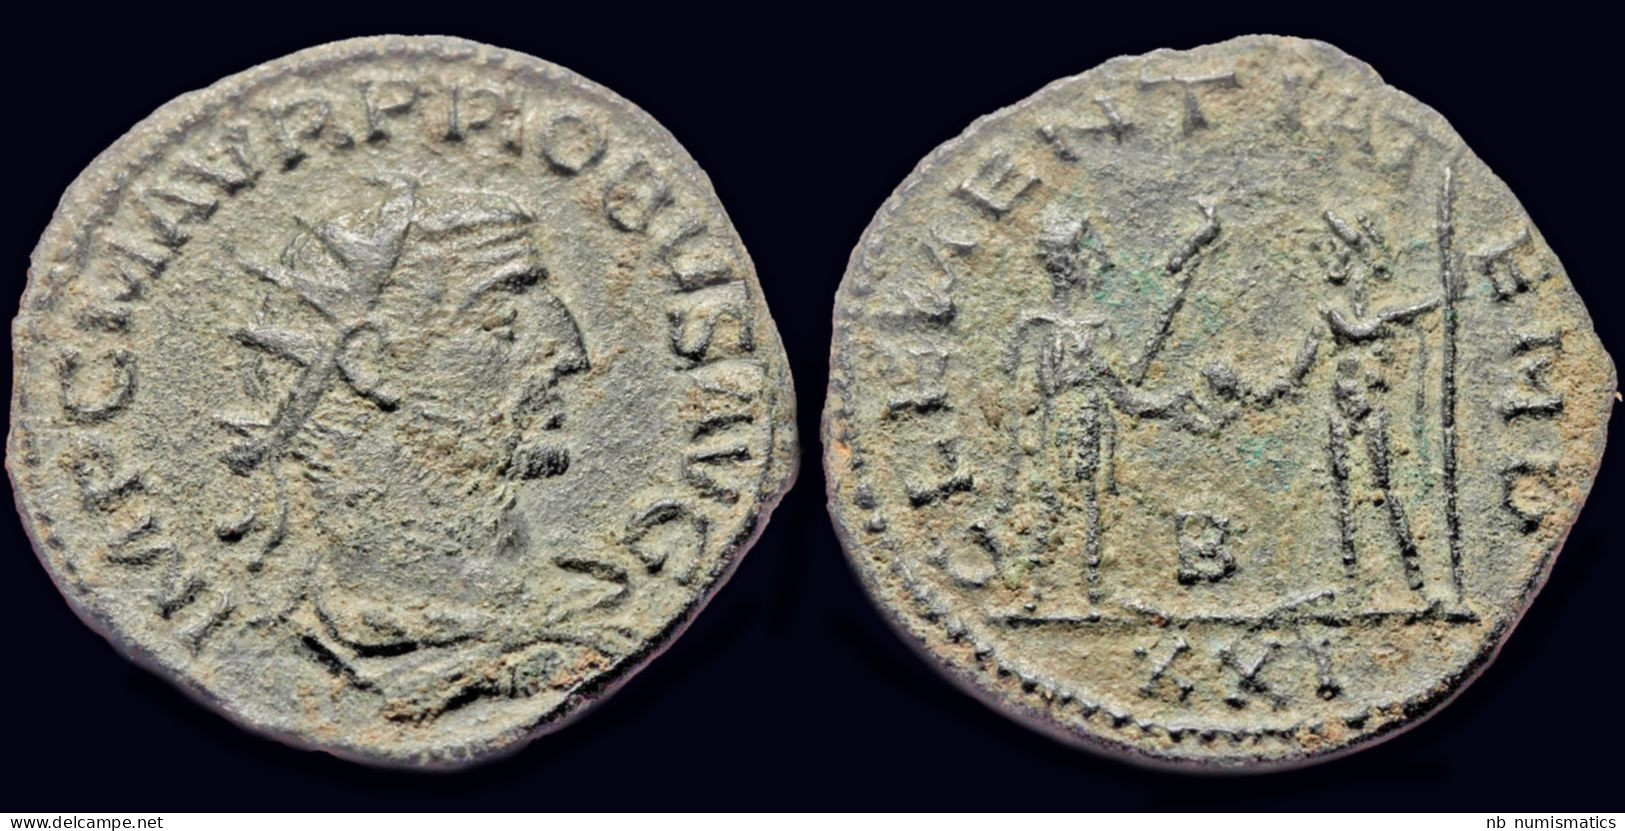 Probus AE Antoninianus Emperor Receiving Globe From Jupiter - L'Anarchie Militaire (235 à 284)